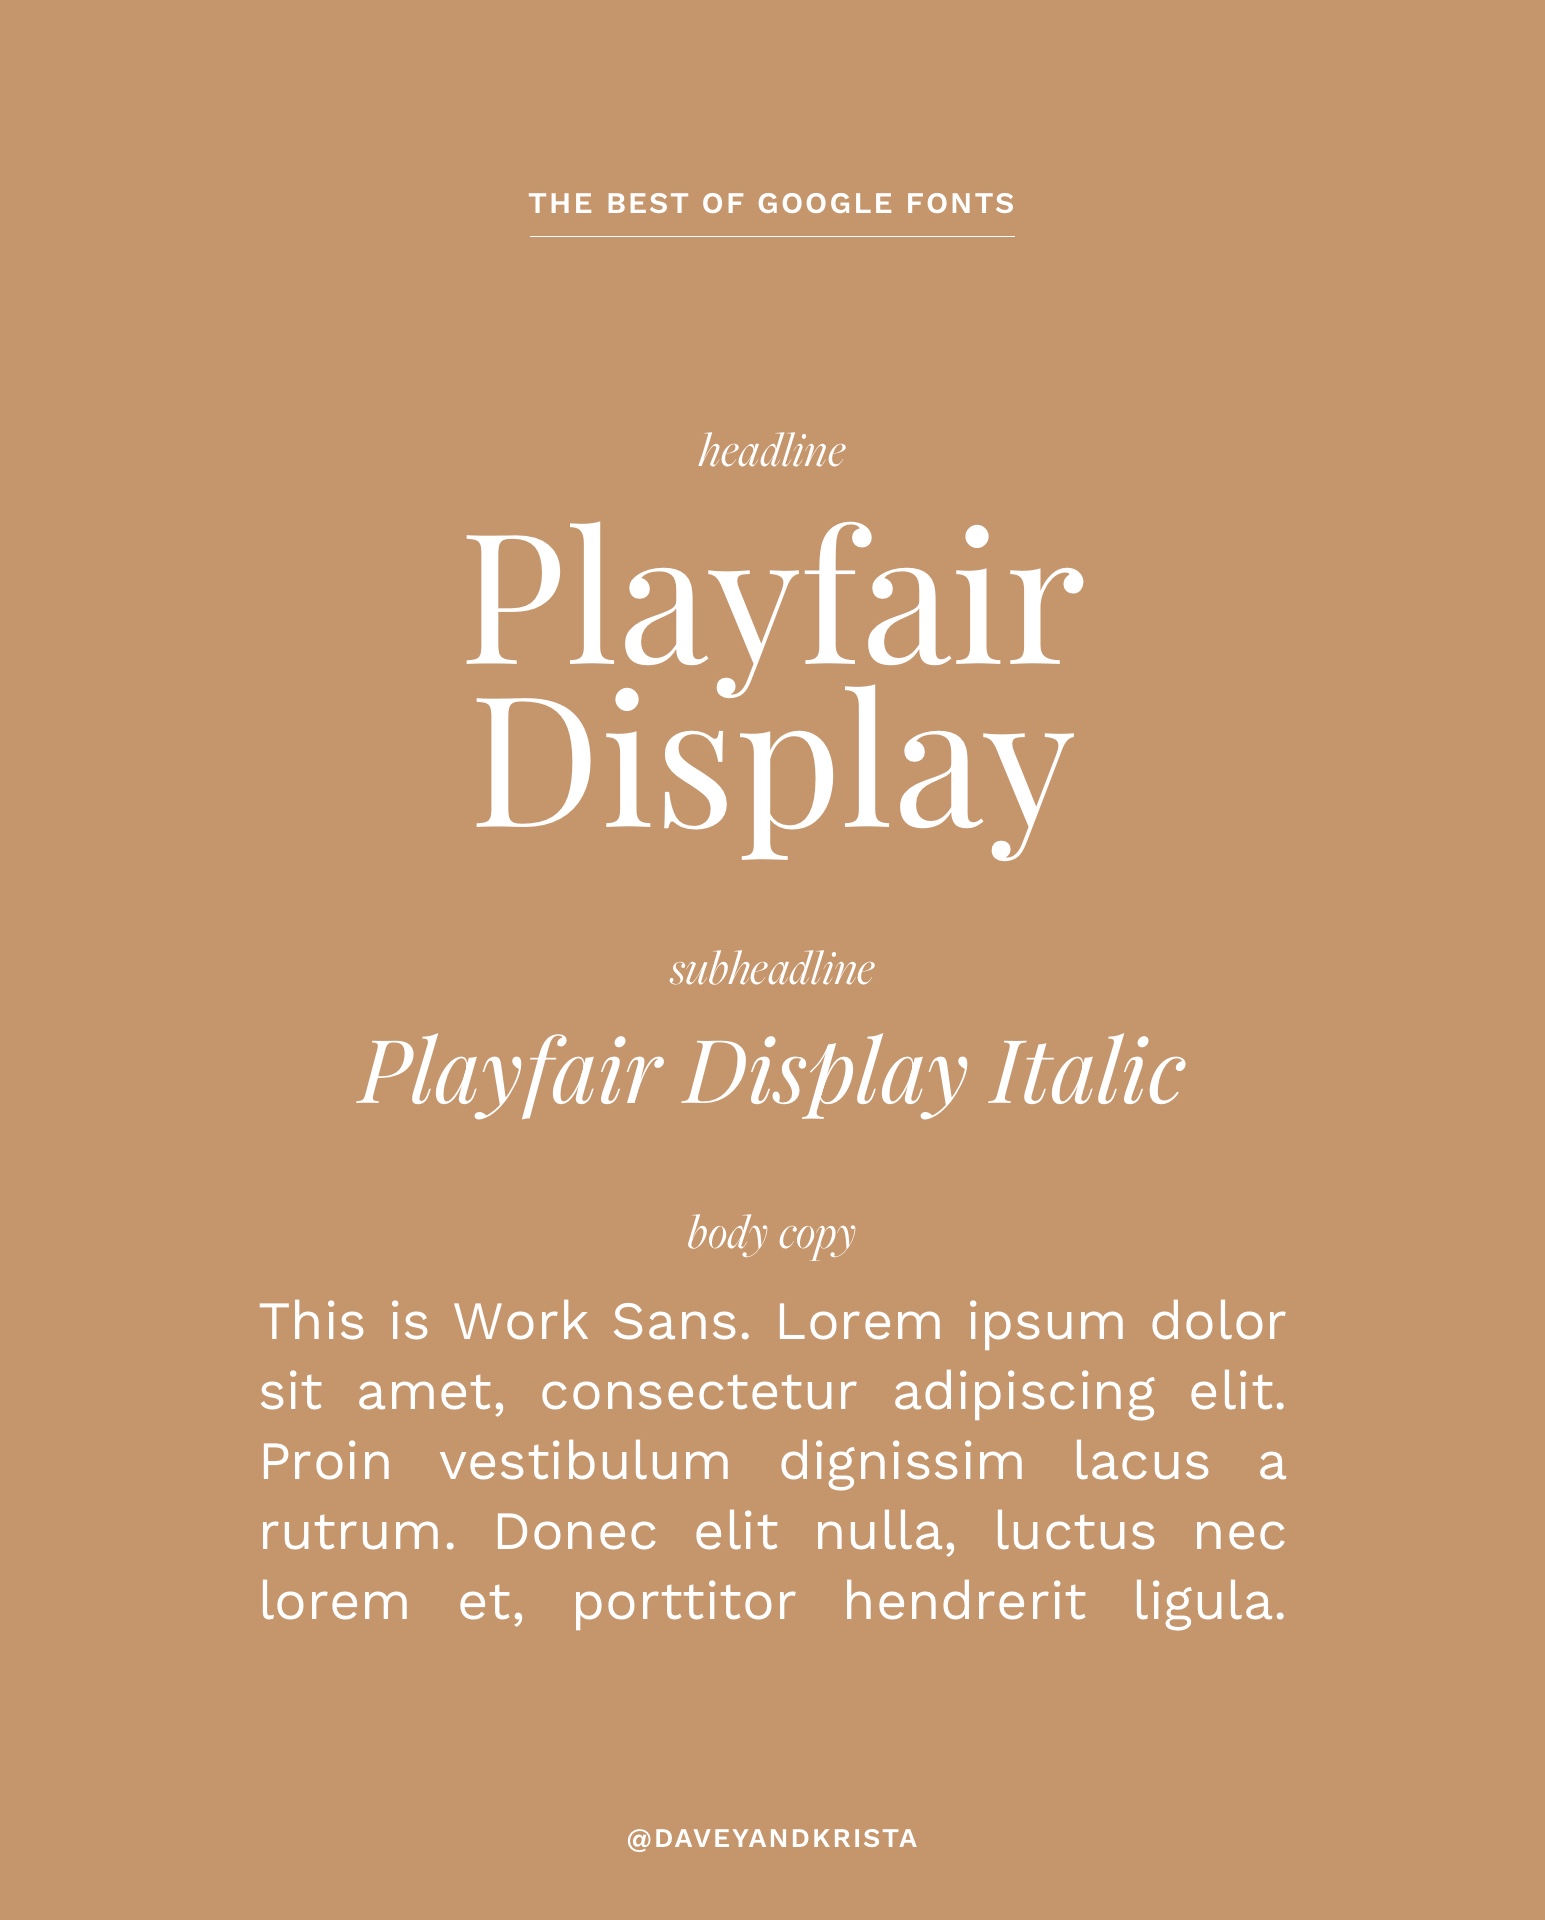 The best of Google Fonts: Playfair Display + Work Sans | Via Davey & Krista
